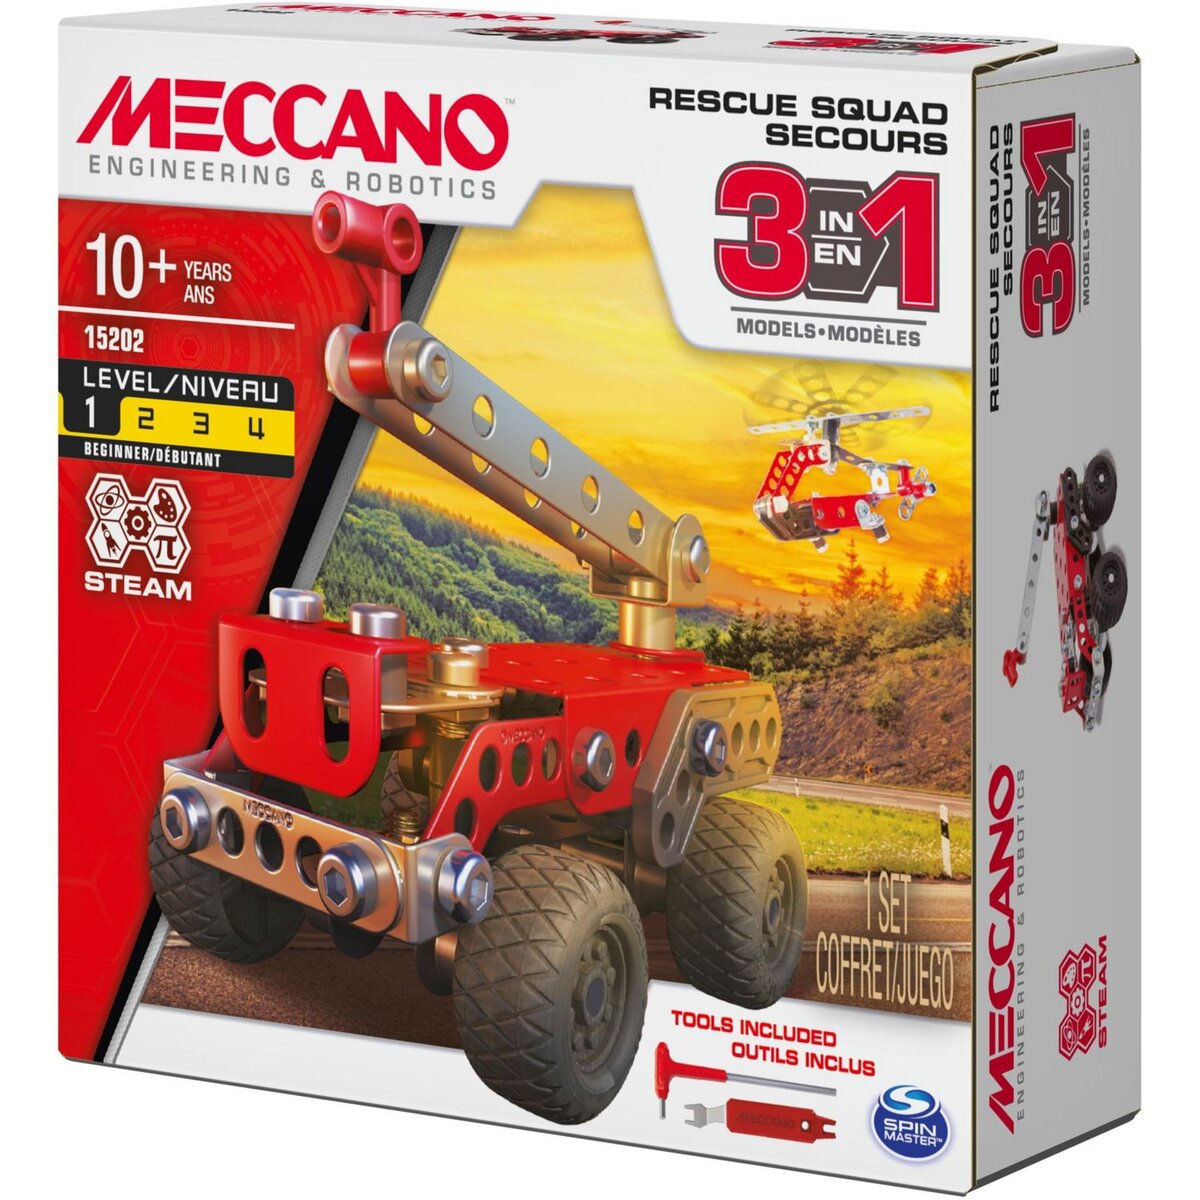 meccano' Secours - 3 Modeles New - N/A - Kiabi - 22.98€